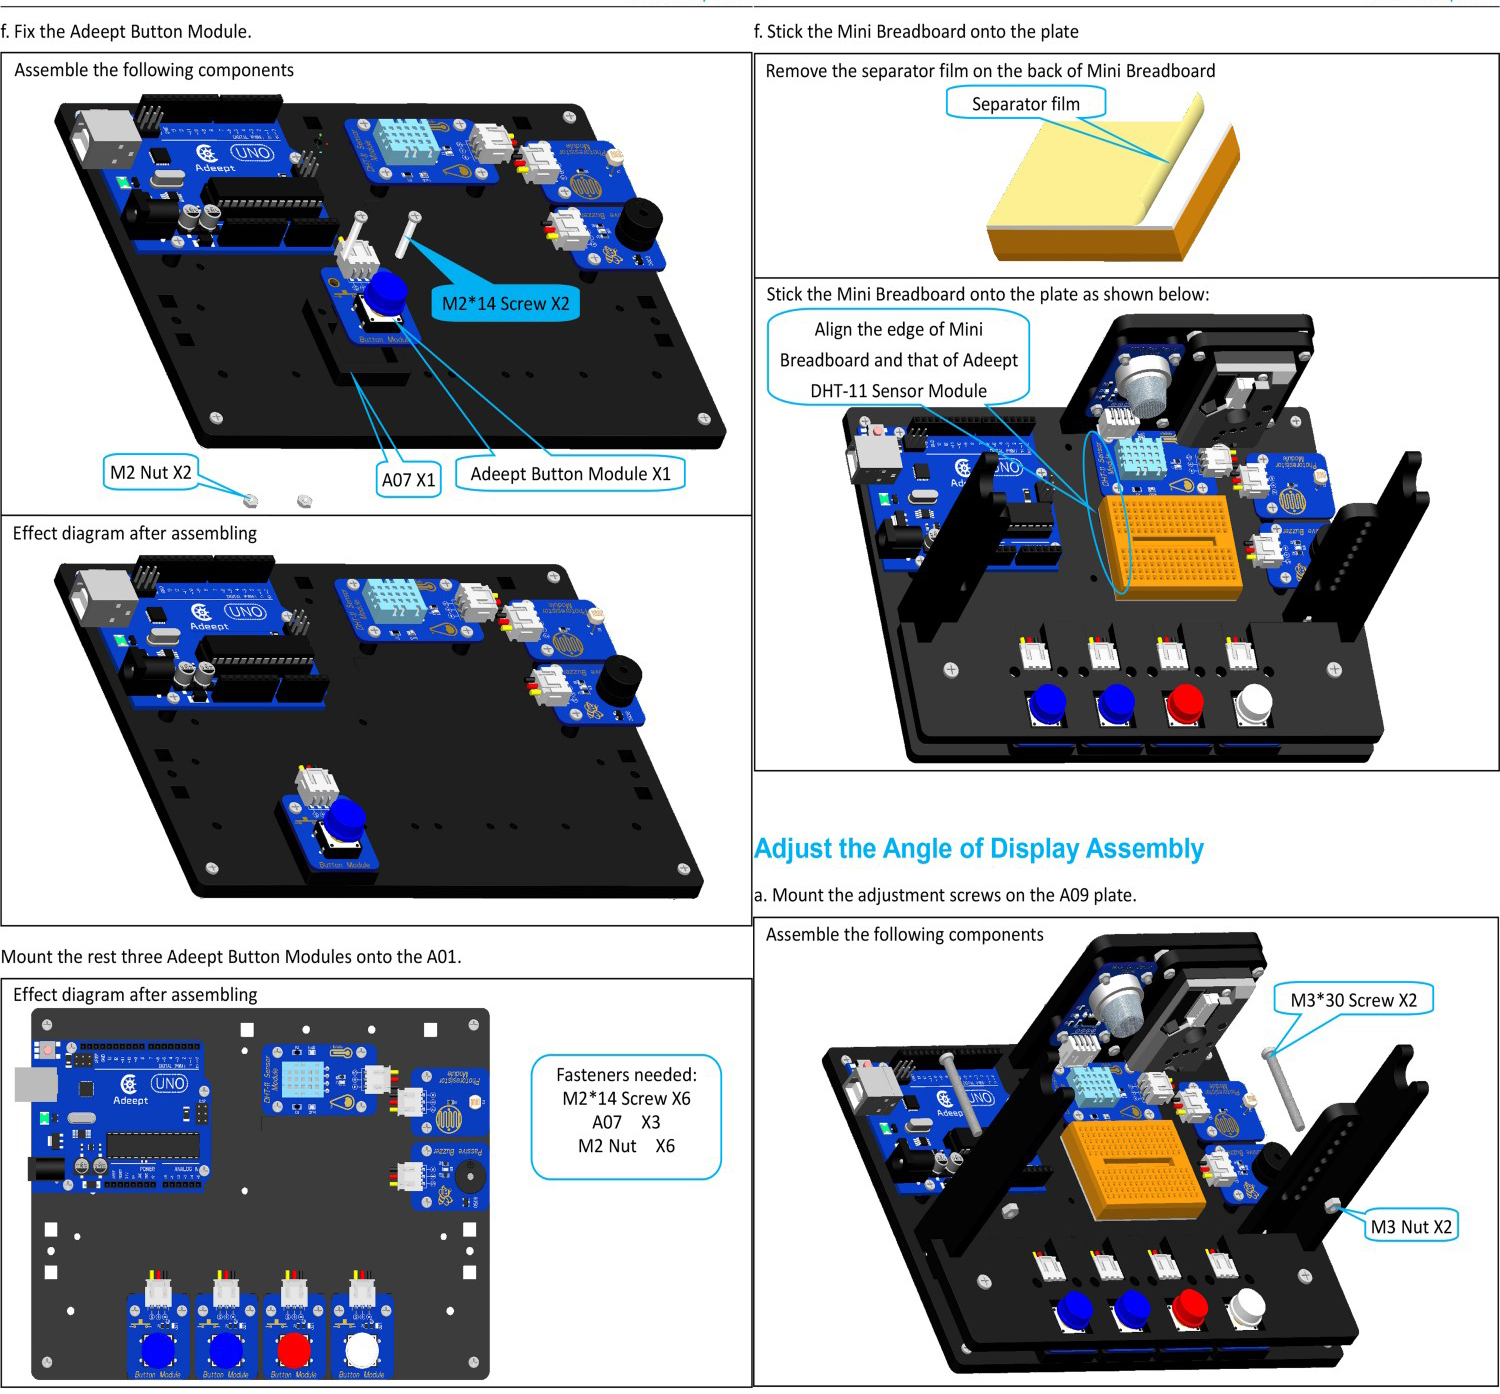 Adeept Indoor Weather Box Arduino UNO R3 Starter Kit - Click to Enlarge